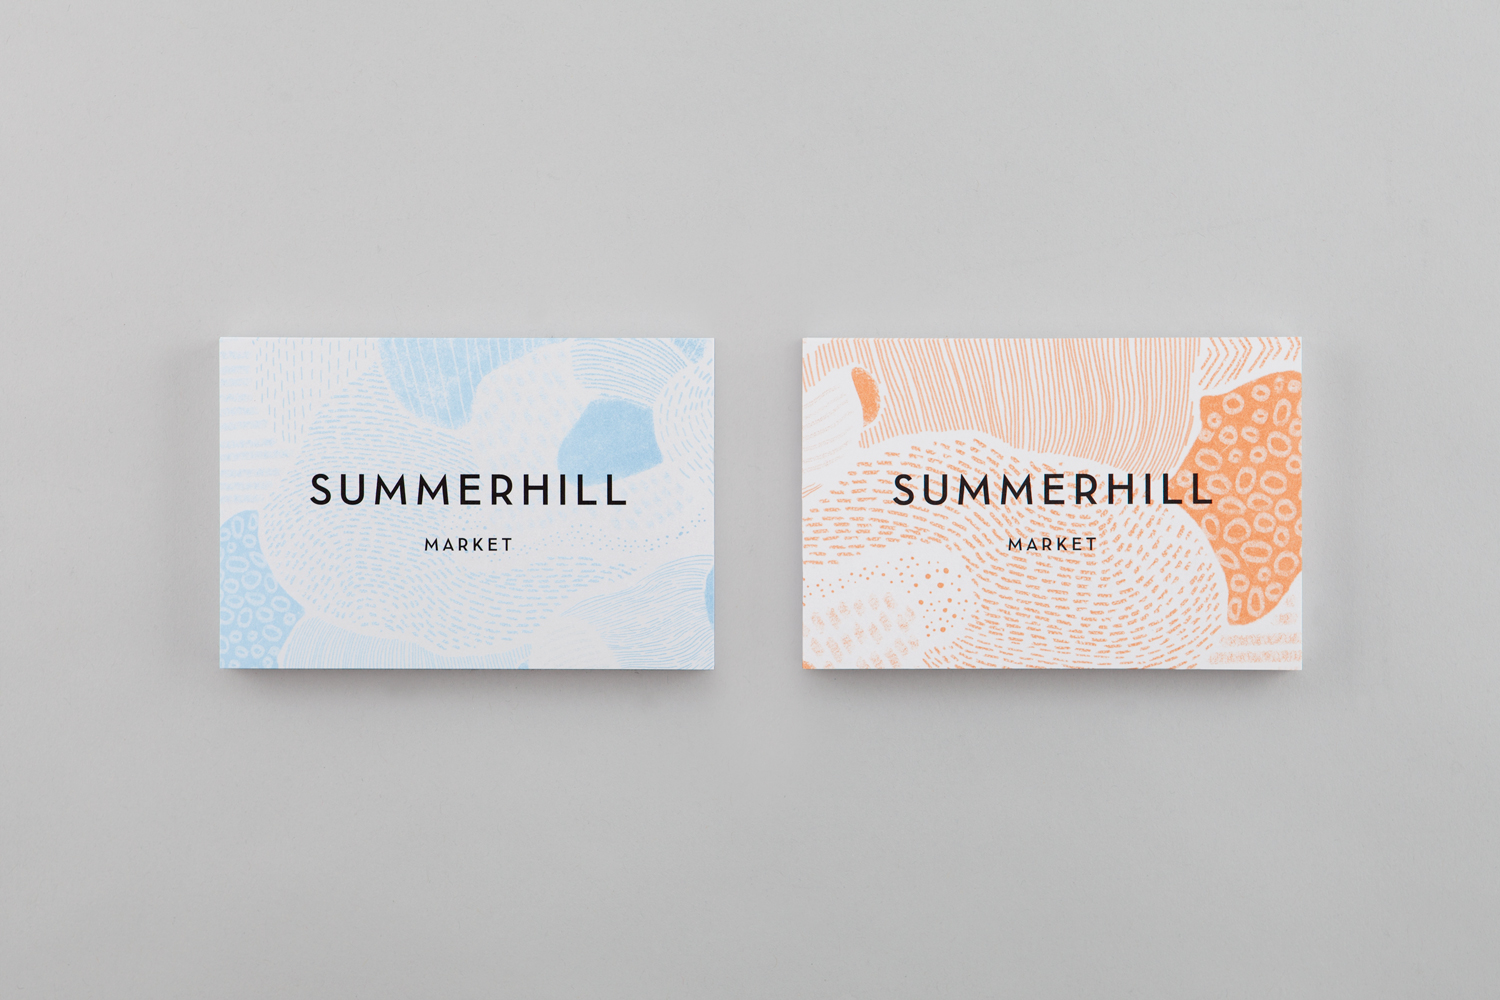 Illustration in Branding – Summerhill Market by Blok, Canada